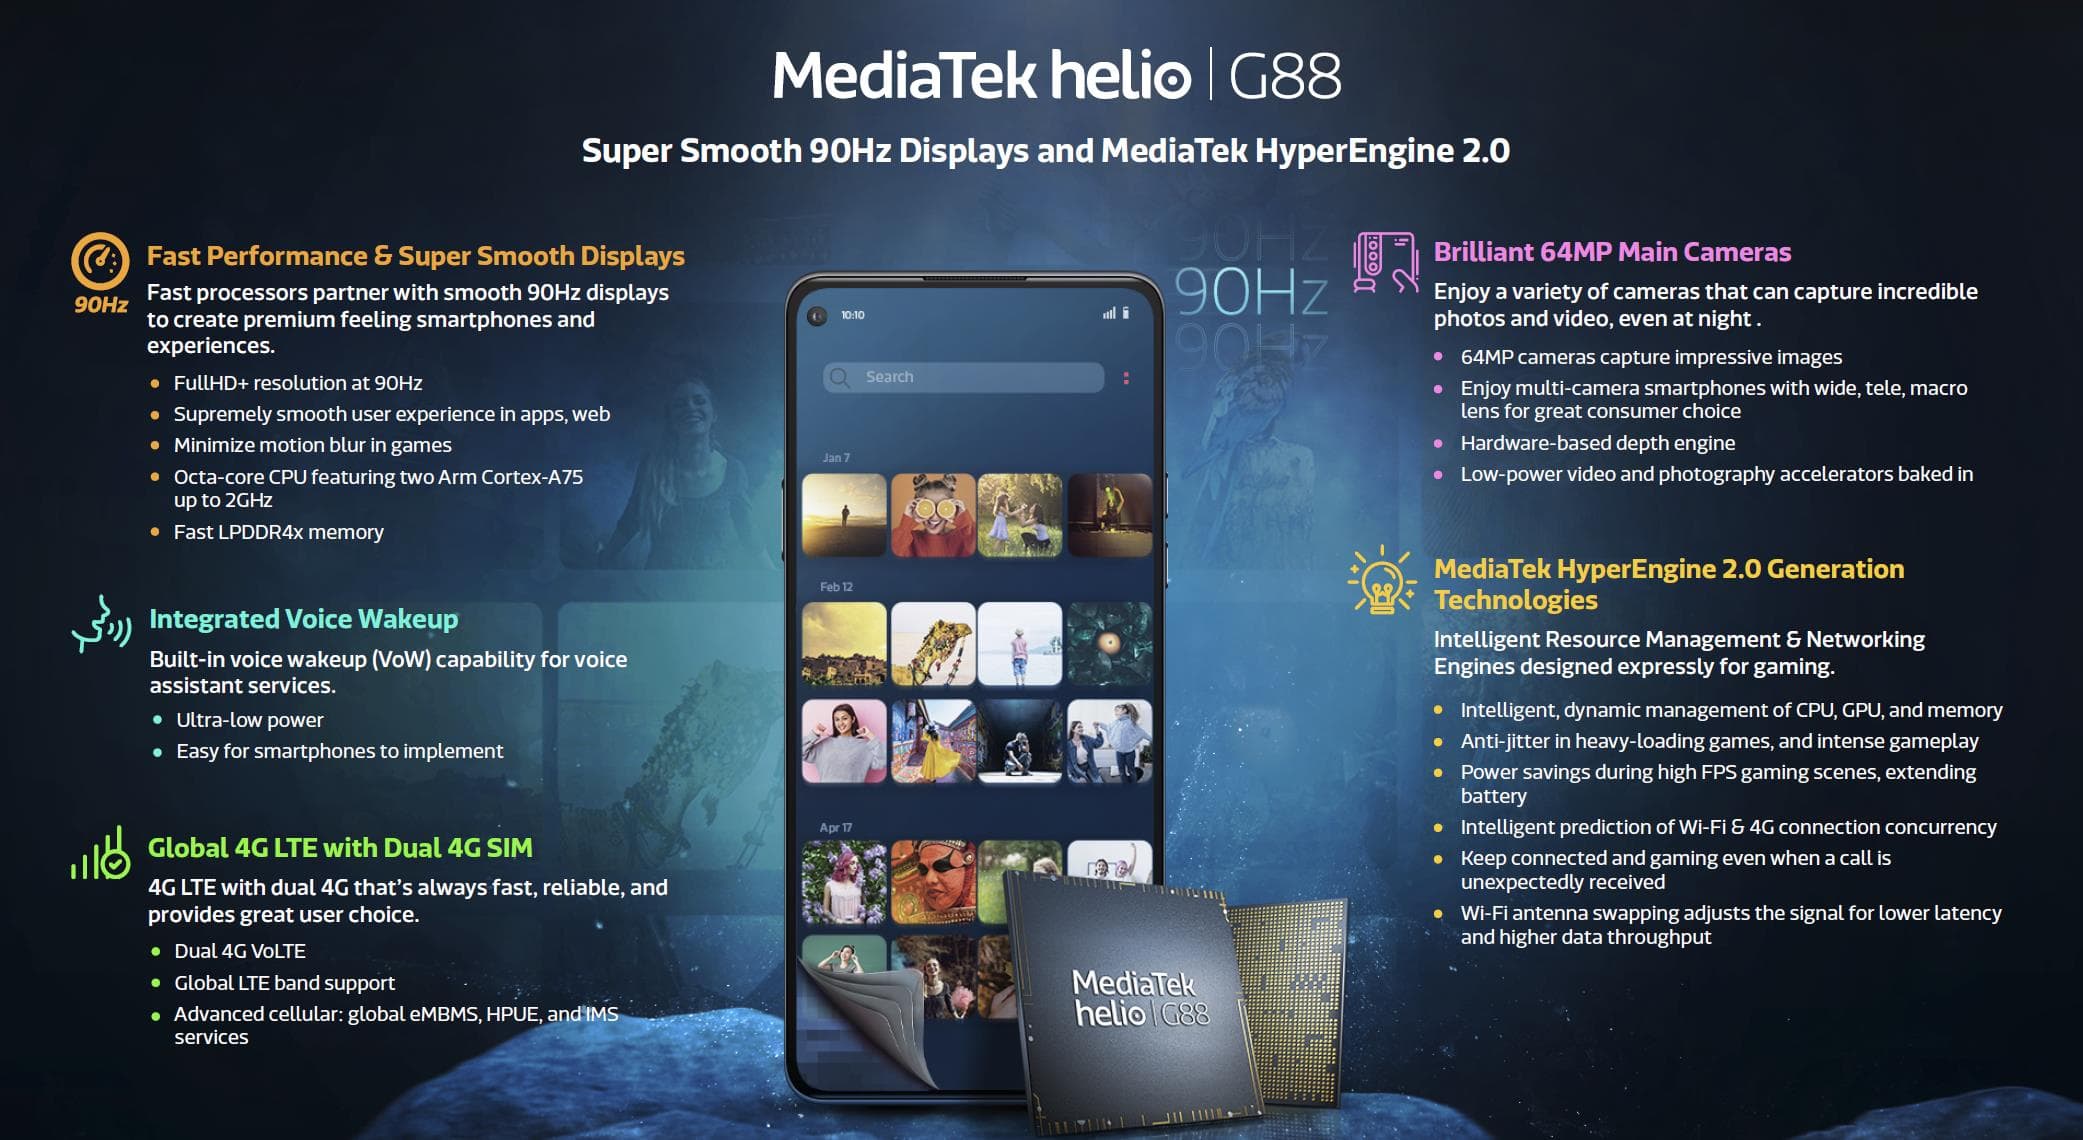 Mediatek Helio G88